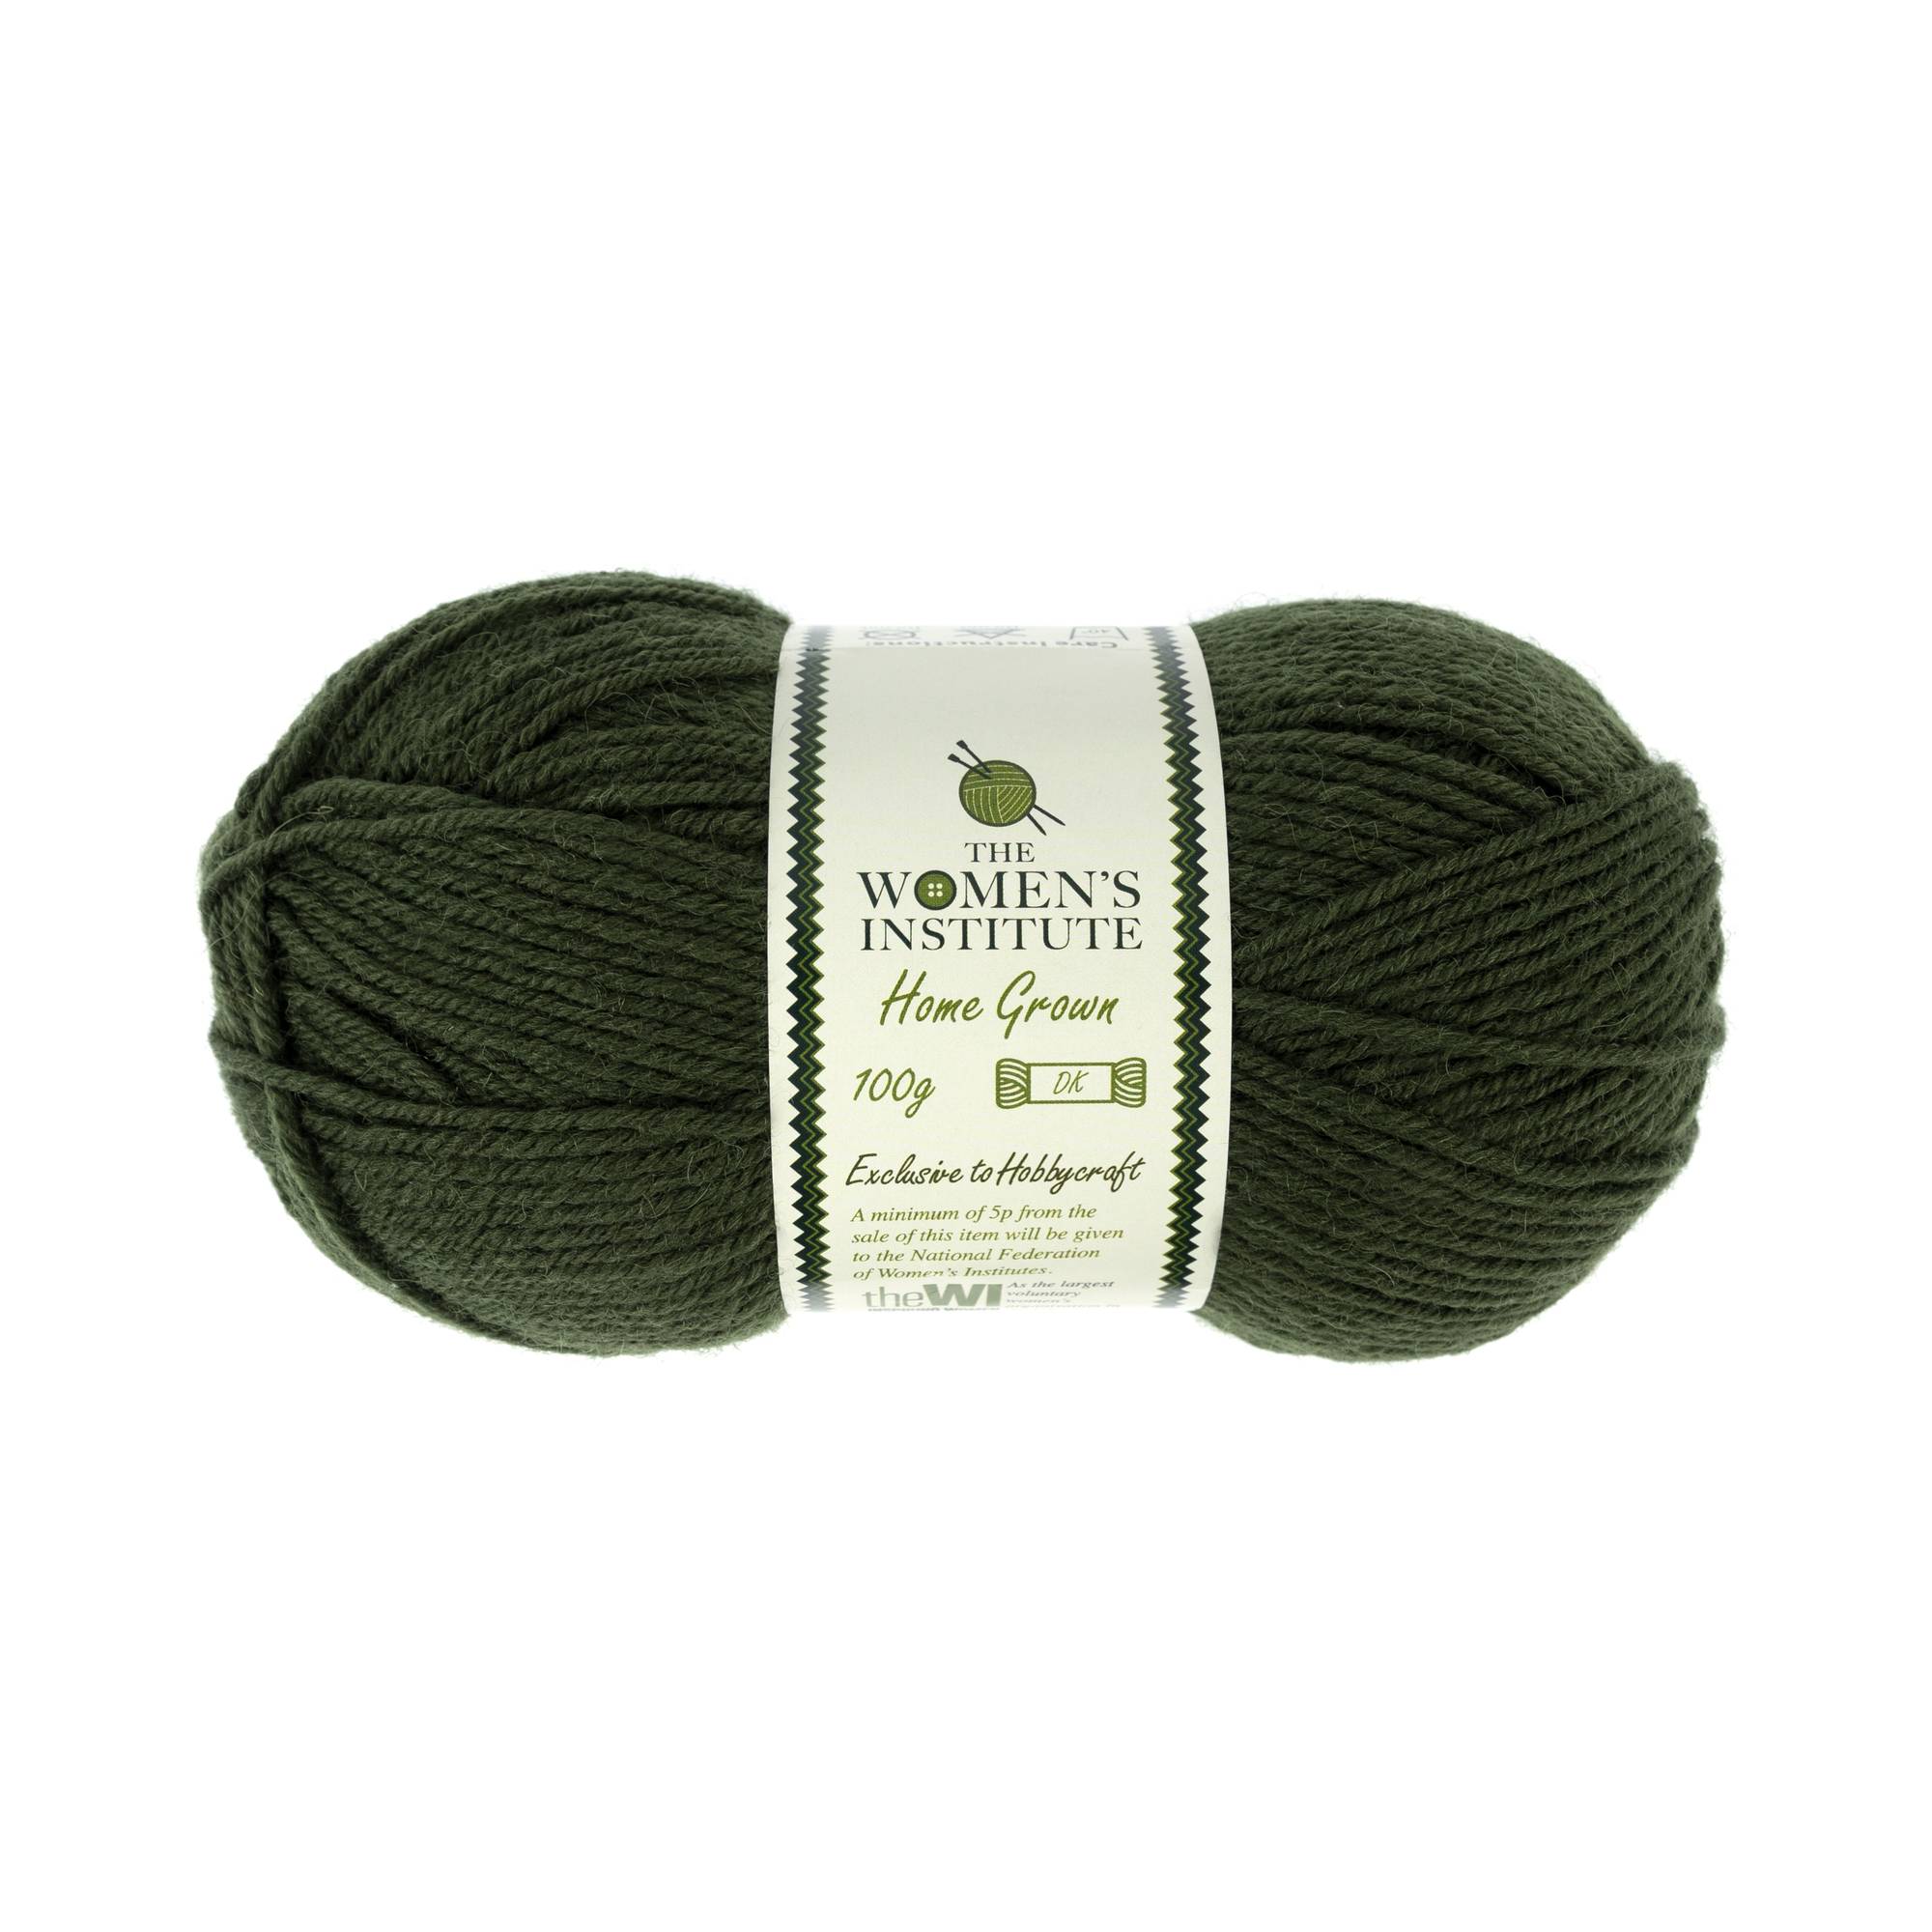 Bulky Yarn by Hobby Store - Dark Green 6013